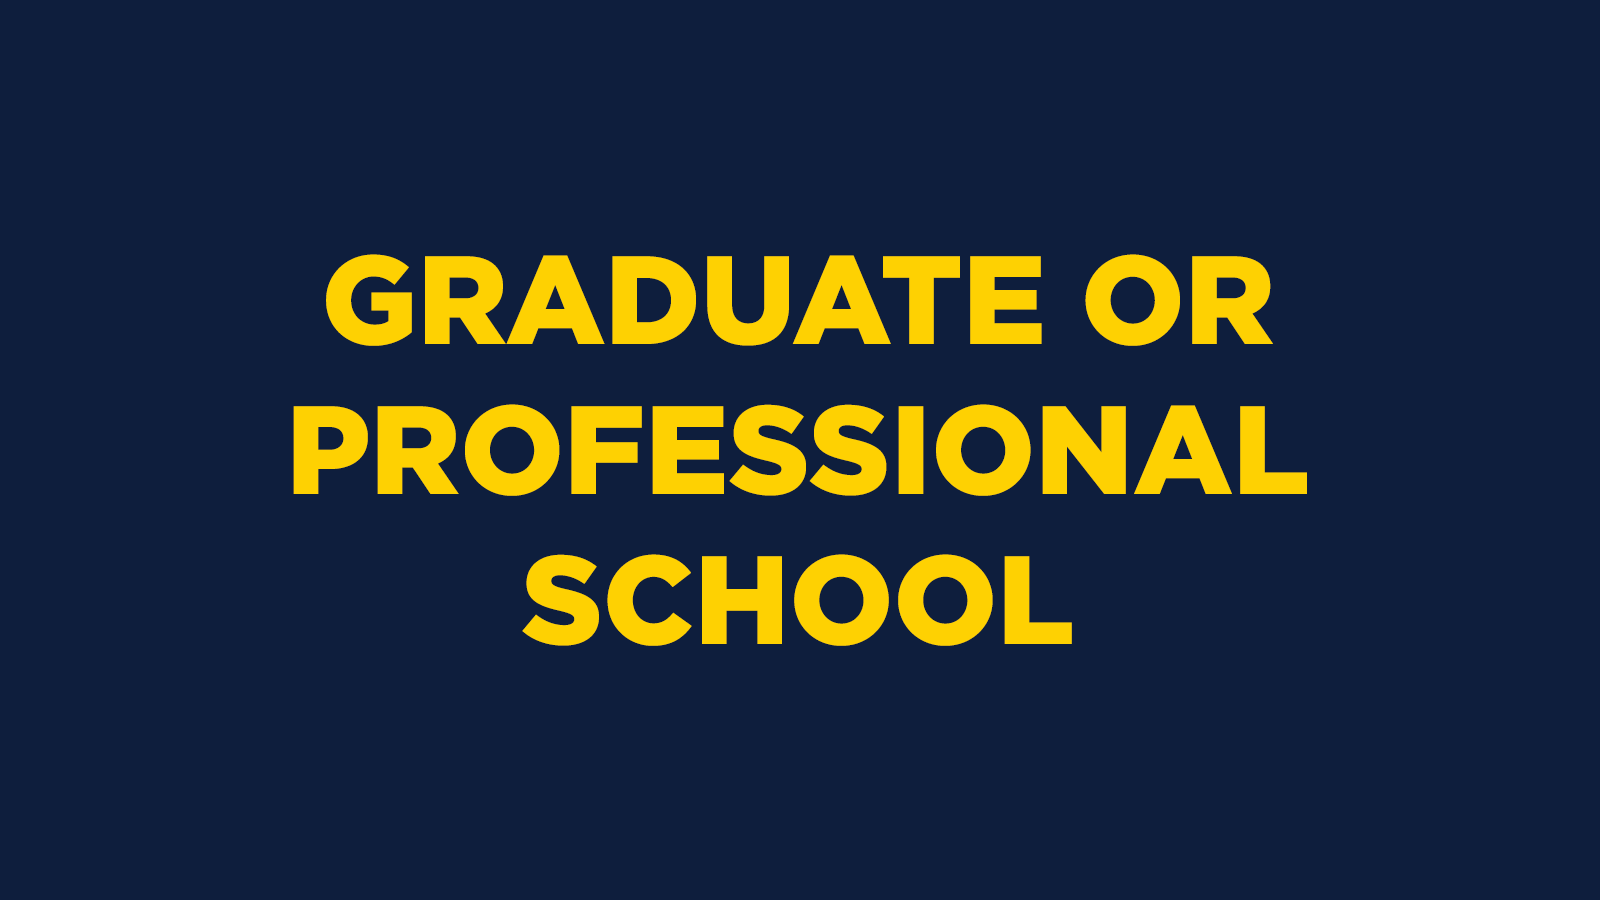 Graduate or Professional School